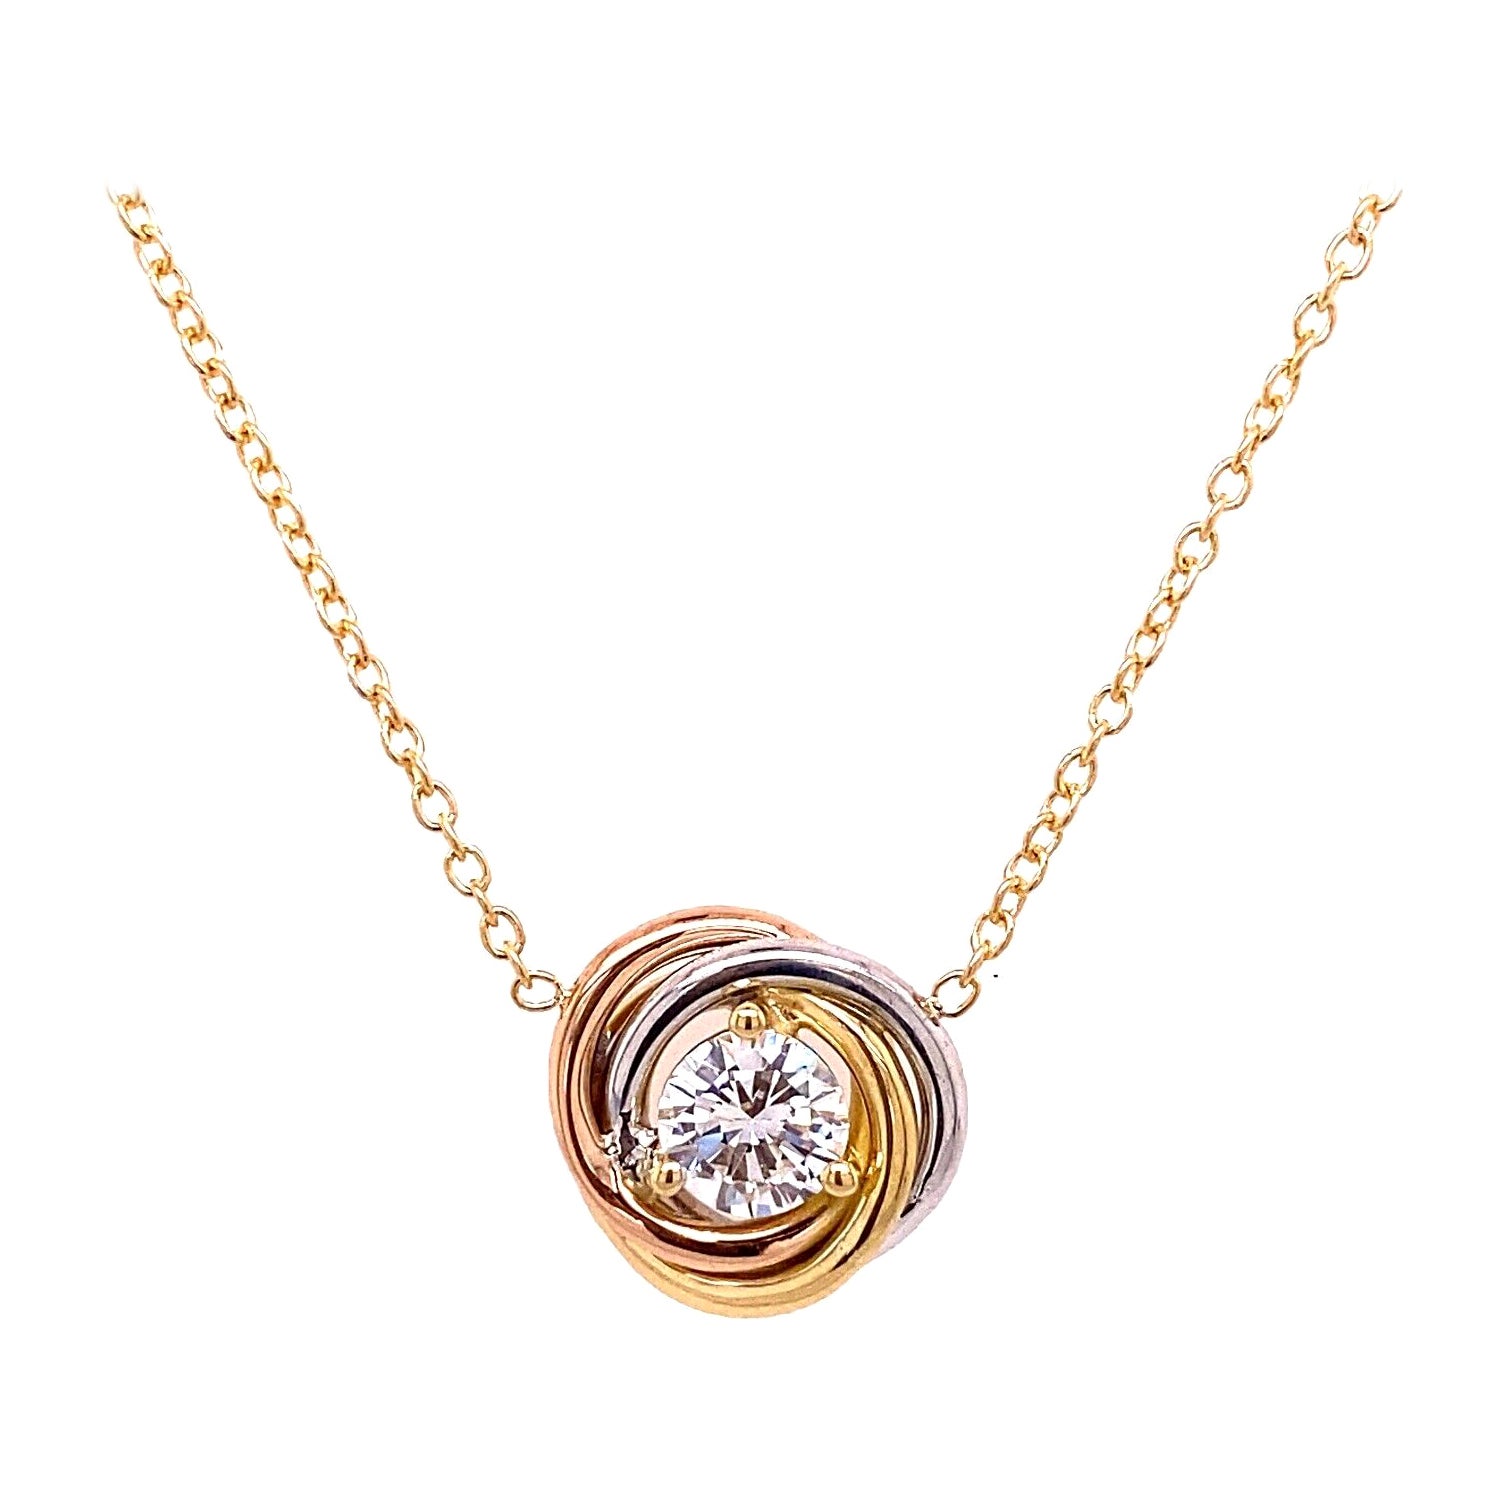 High Polish Puffed Heart Necklace in Tri-colour Gold | Costco